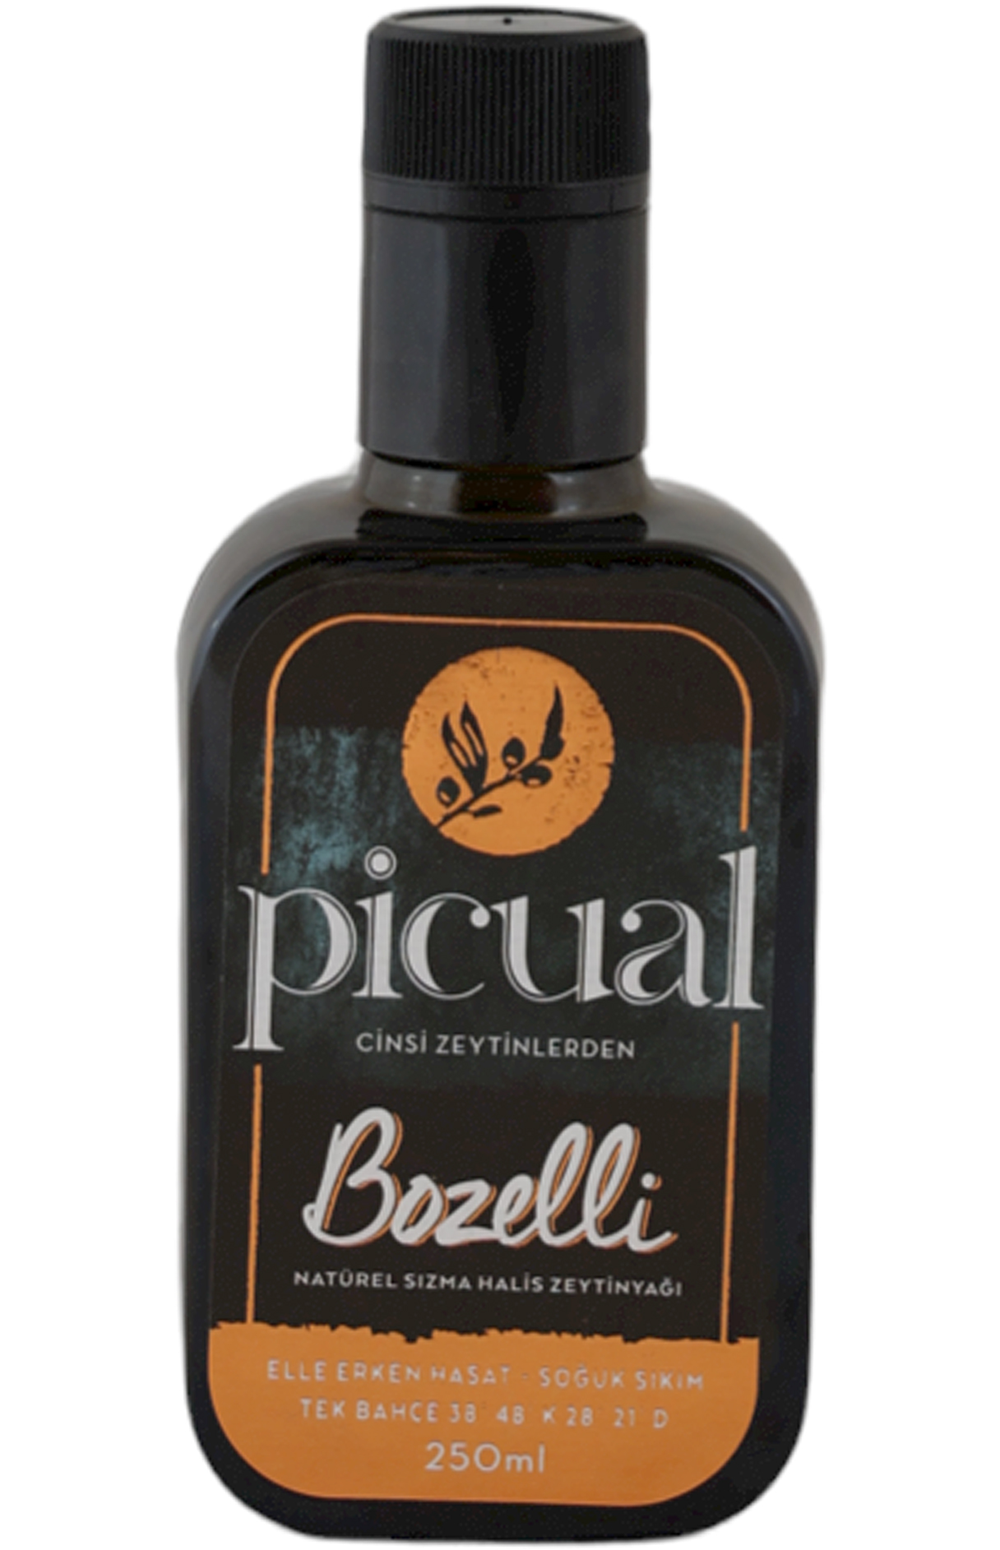 Bozelli Picual